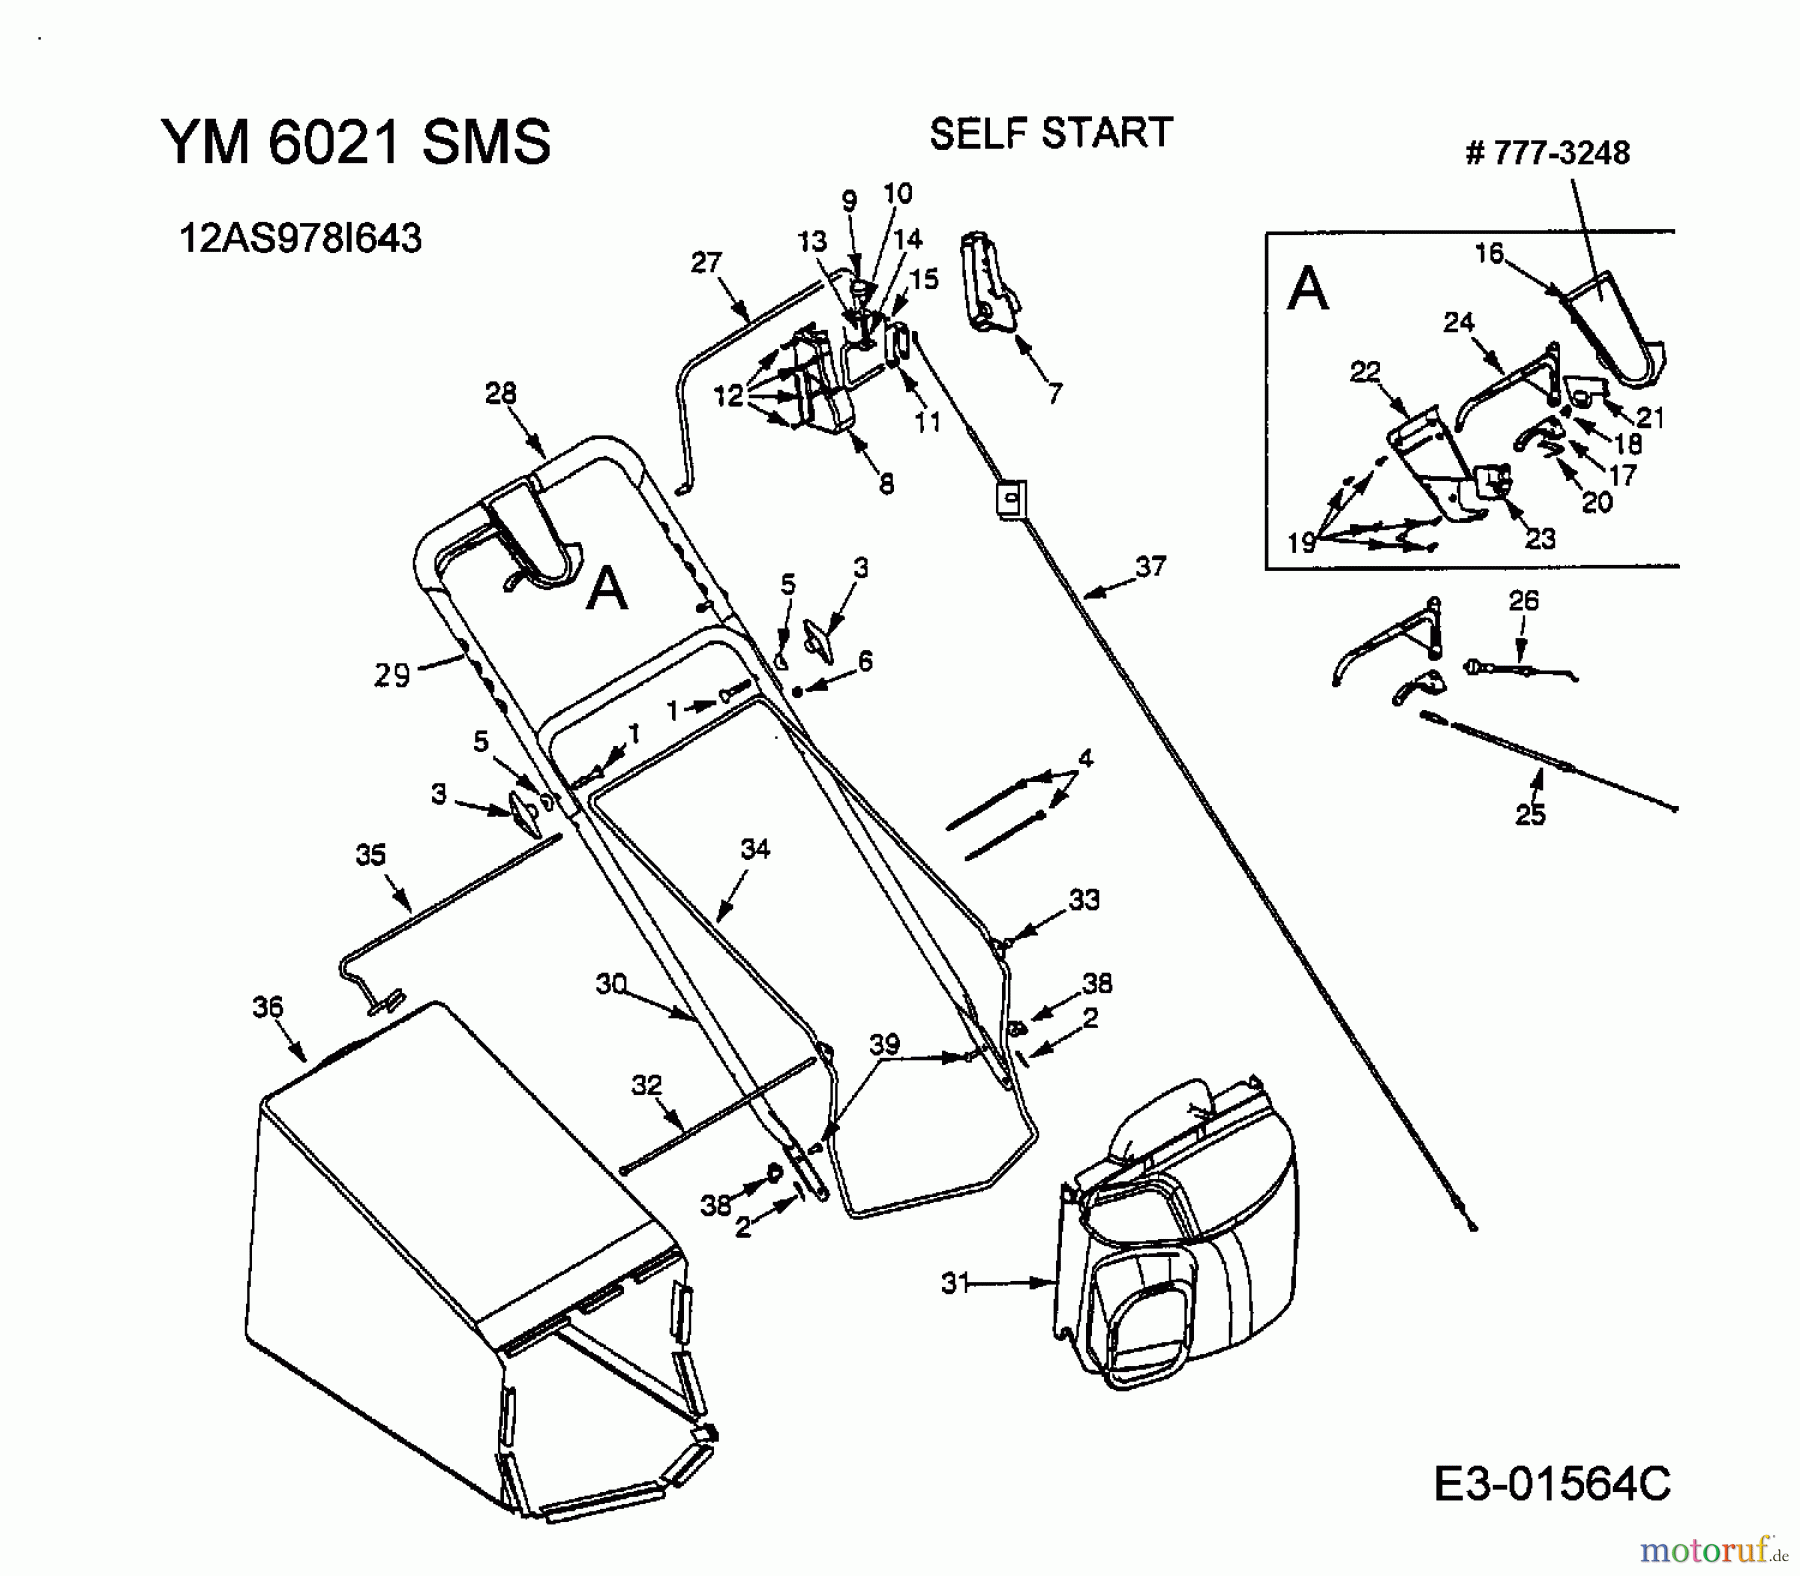  Yard-Man Motormäher mit Antrieb YM 6021 SMS 12A-979T643  (2001) Grasfangsack, Holm